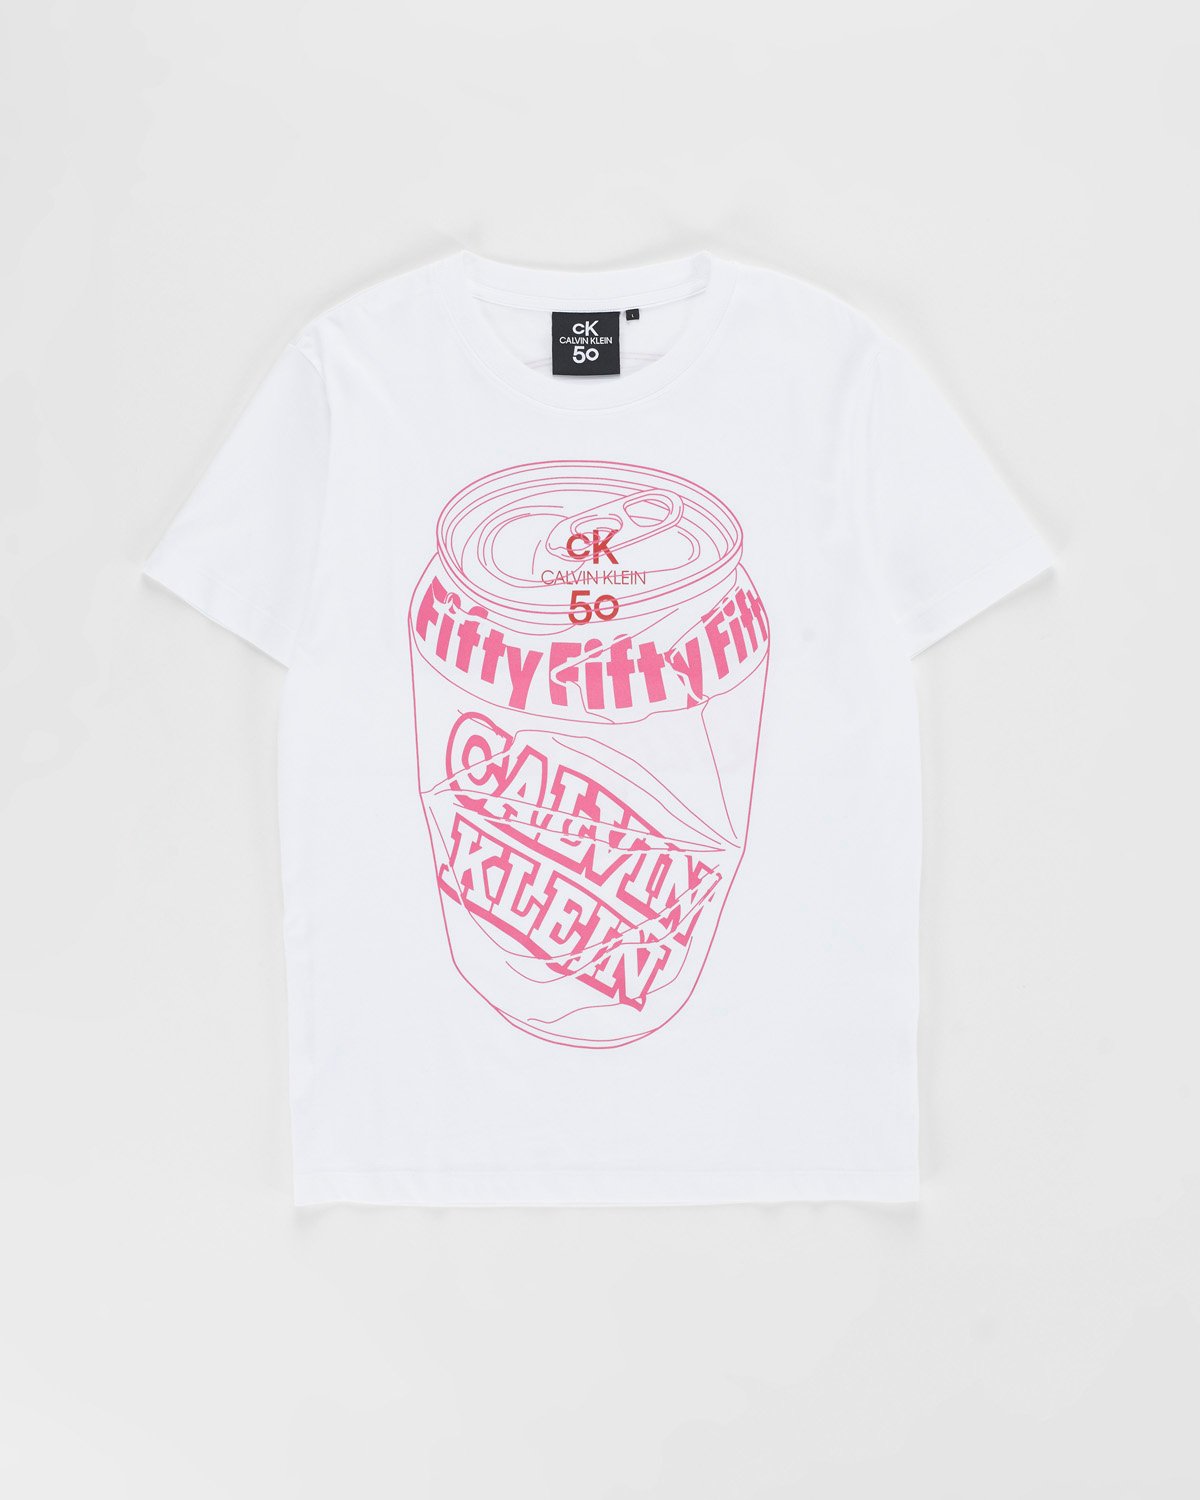 Calvin Klein x Highsnobiety - CK50 T-shirt - Clothing - White - Image 1